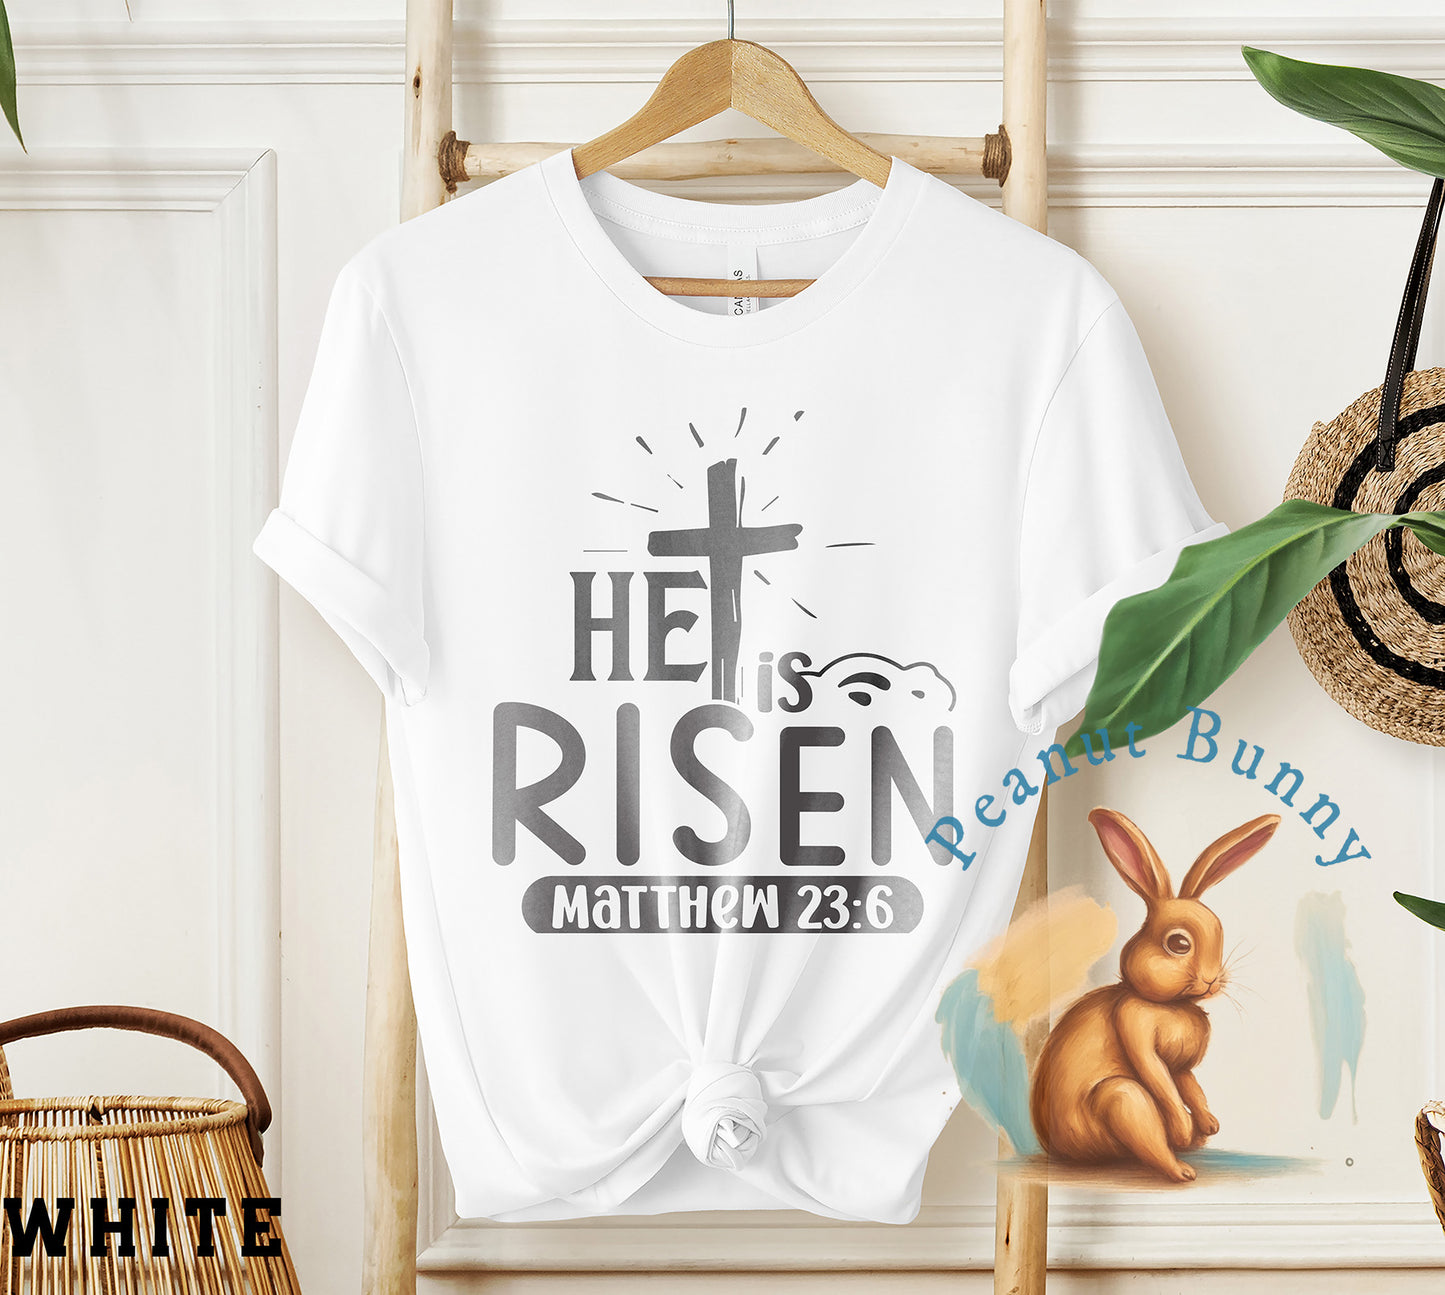 He is risen matthew 23 6-01 Christian DTF 333